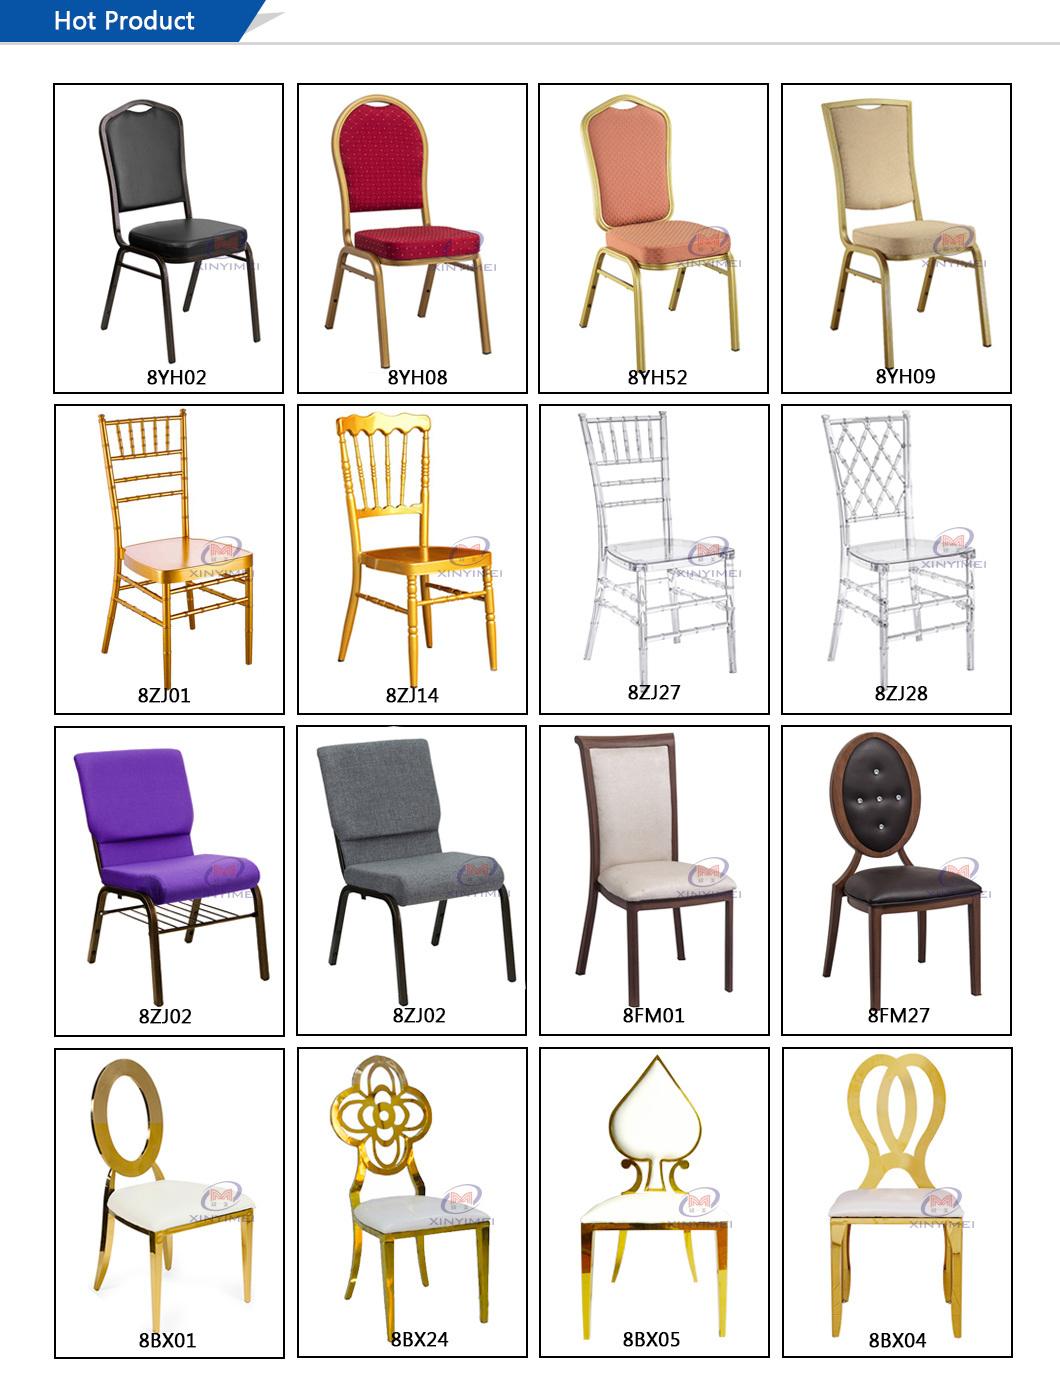 Factory Direct Plastic Folding Chair, Wholesale Wedding Chair, Foldable Plastic Chair Price